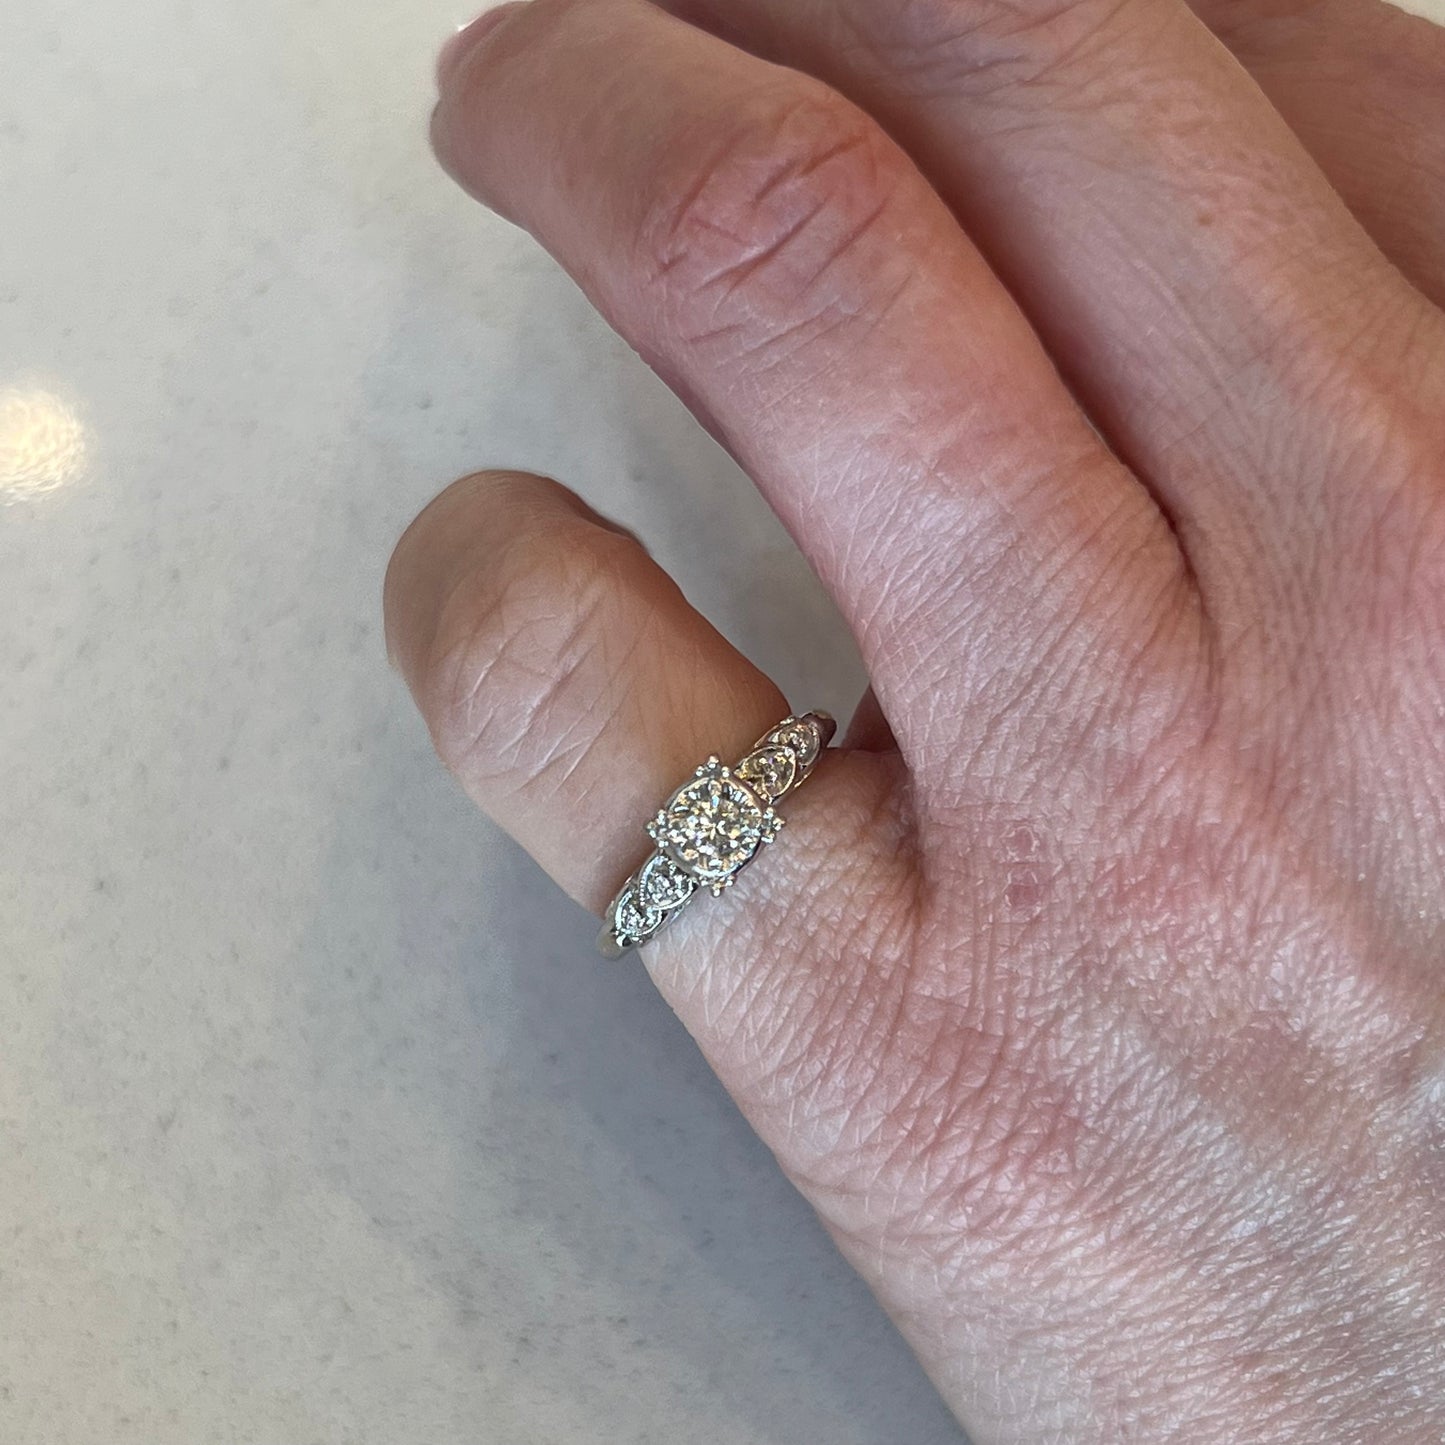 Vintage Mid-Century Diamond Engagement Ring in 14k